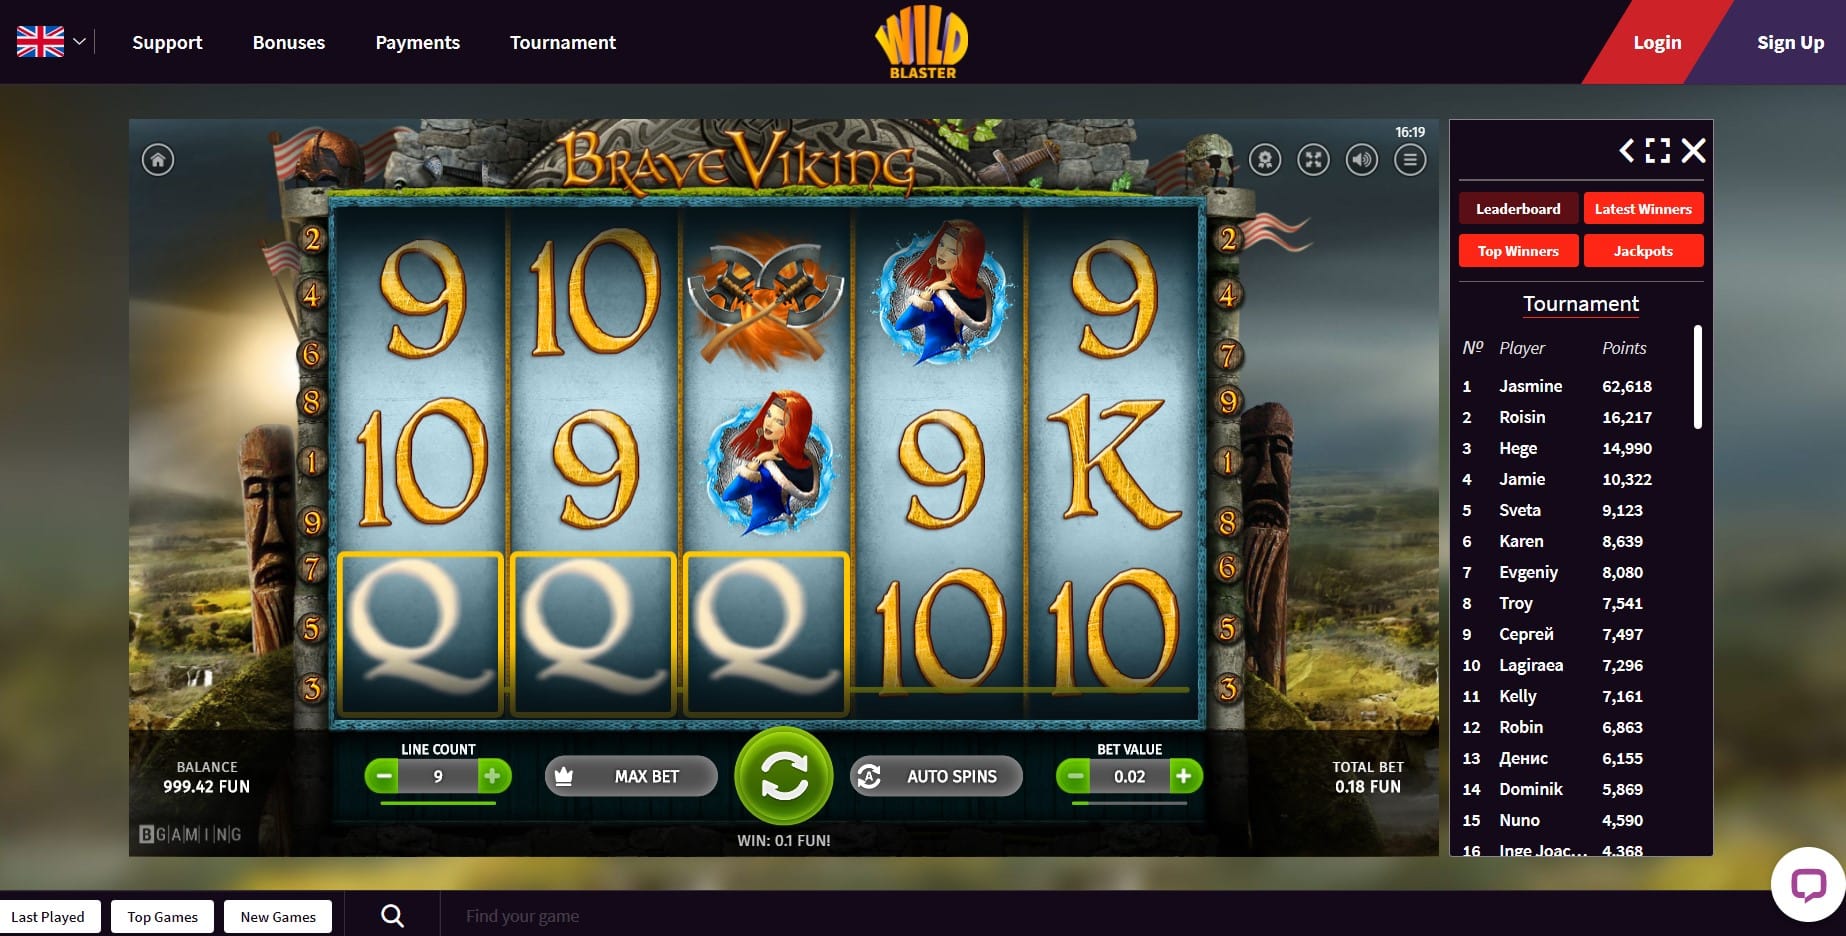 Wildblaster Casino Slot game Brave Viking